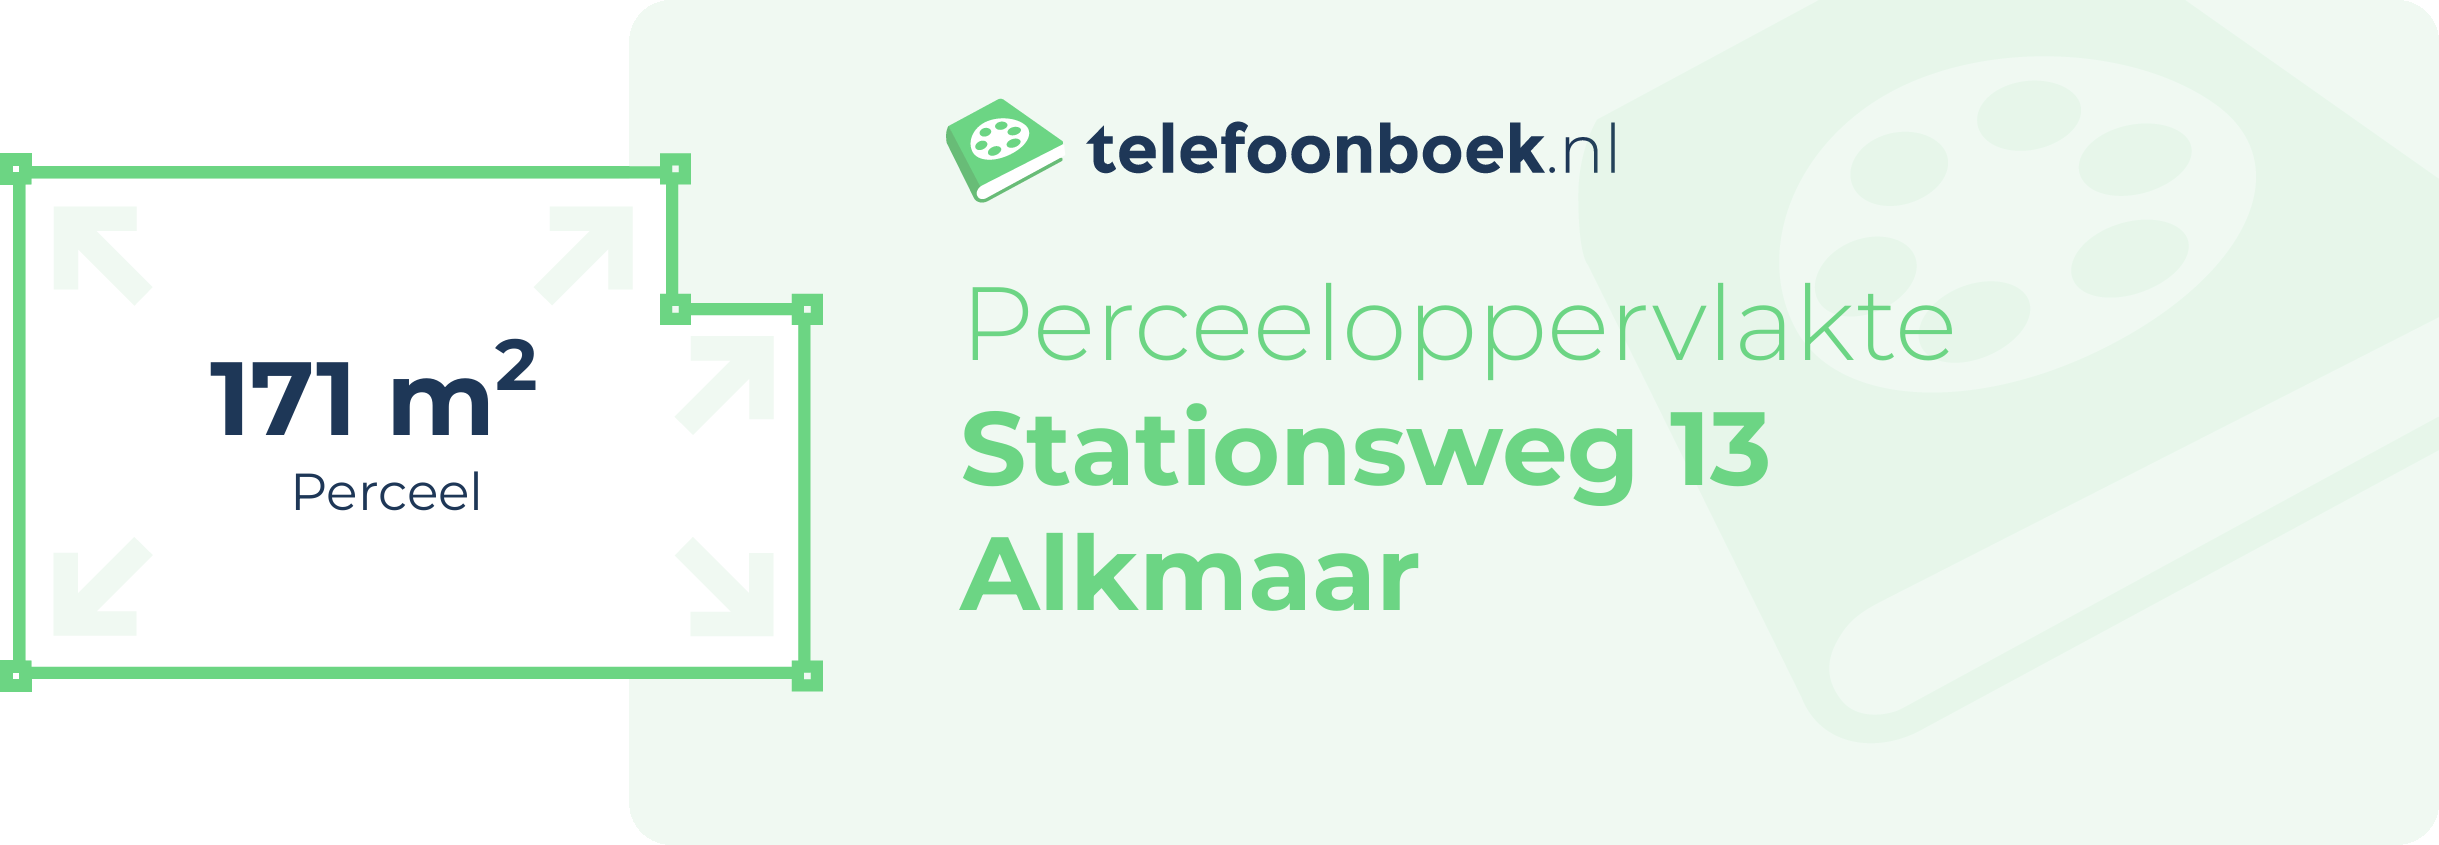 Perceeloppervlakte Stationsweg 13 Alkmaar